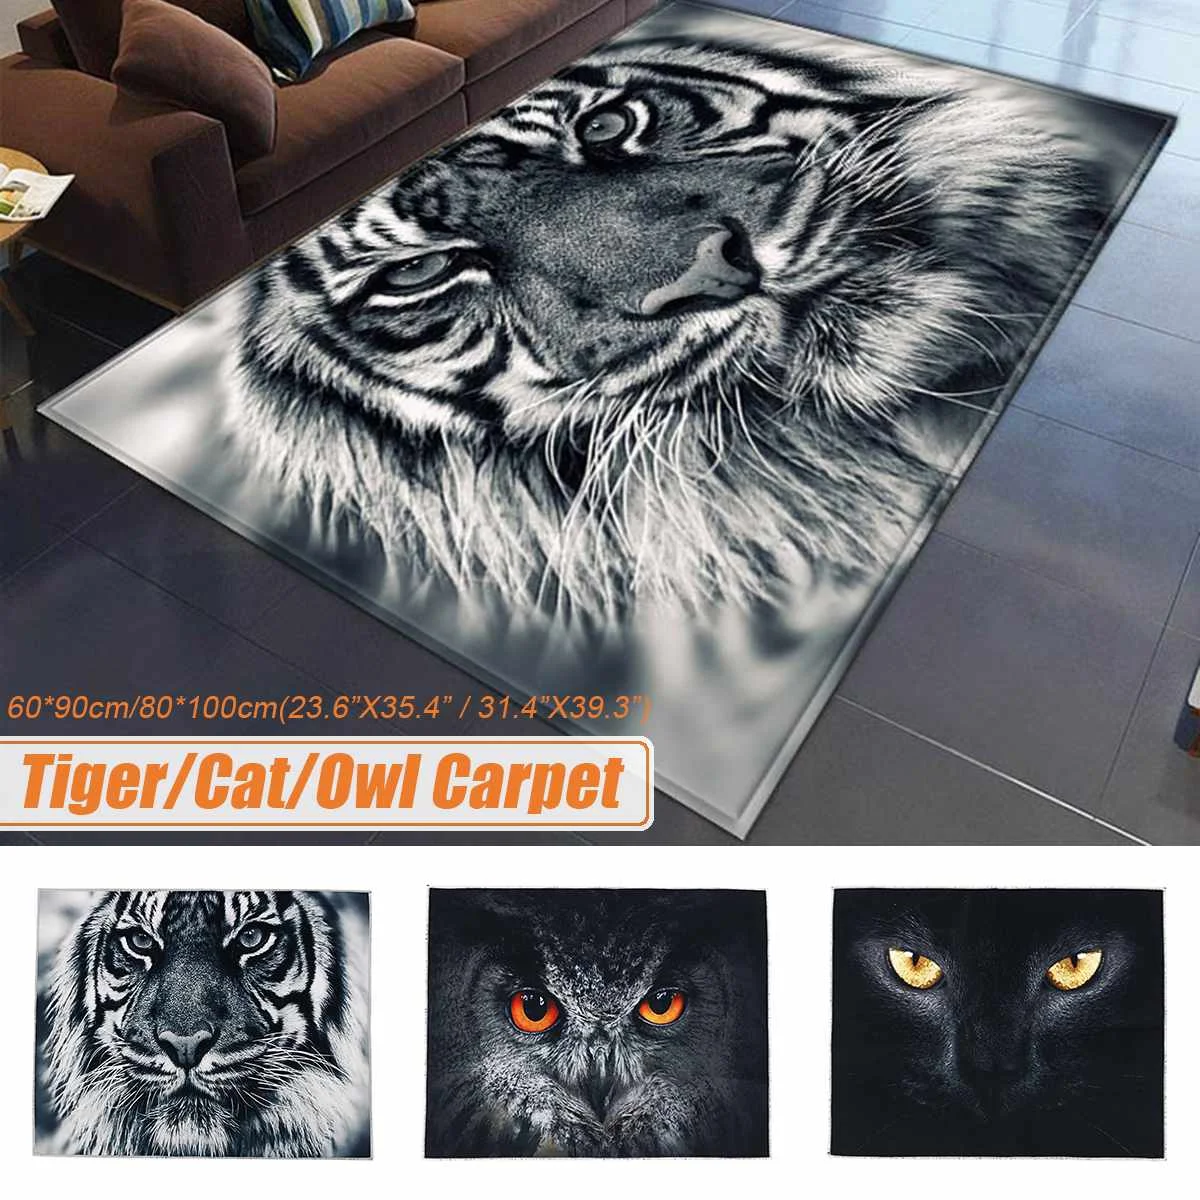 

Fashion Tiger/Cat/Owl 3D Pattern Carpet On The Floor Animal Printed Carpet Living Room Soft Bathroom Mat Absorb Anti-slip